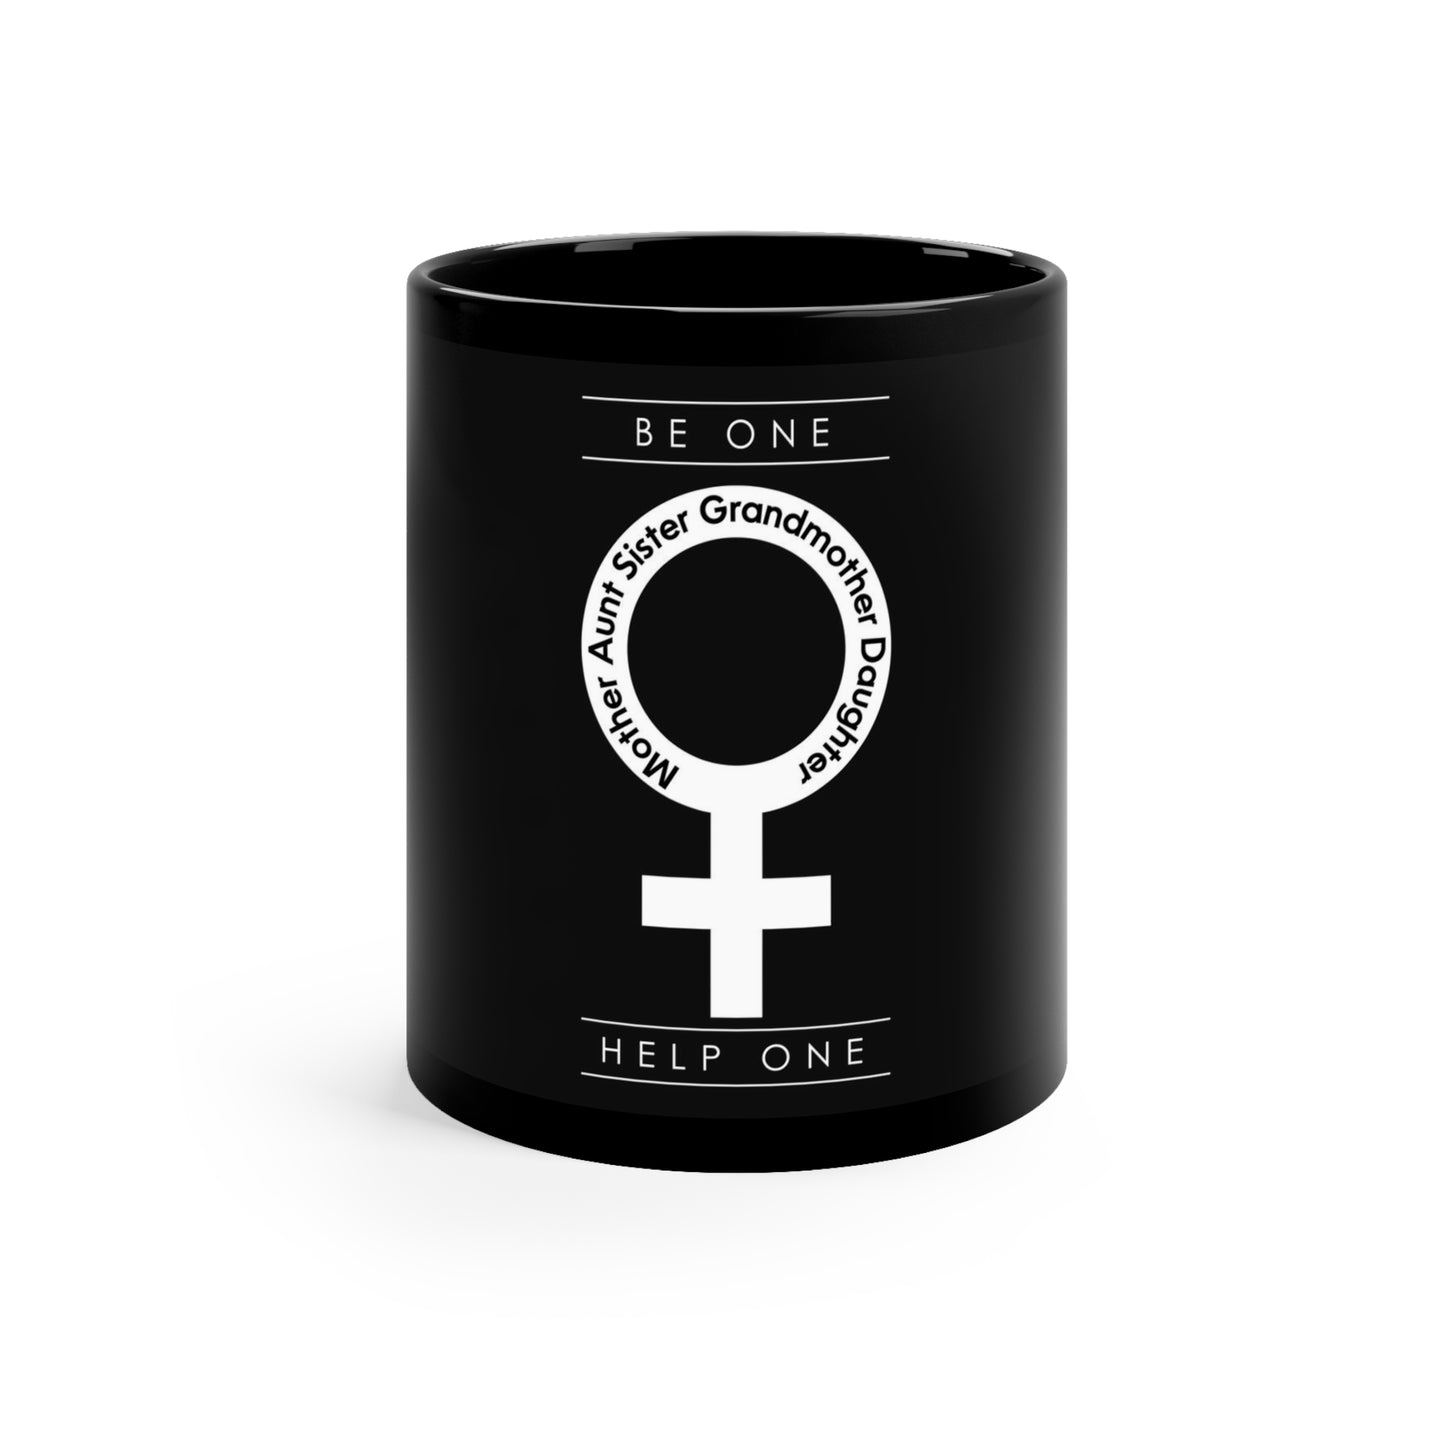 BE ONE. HELP ONE. COFFEE MUG FOR WOMEN & GIRLS